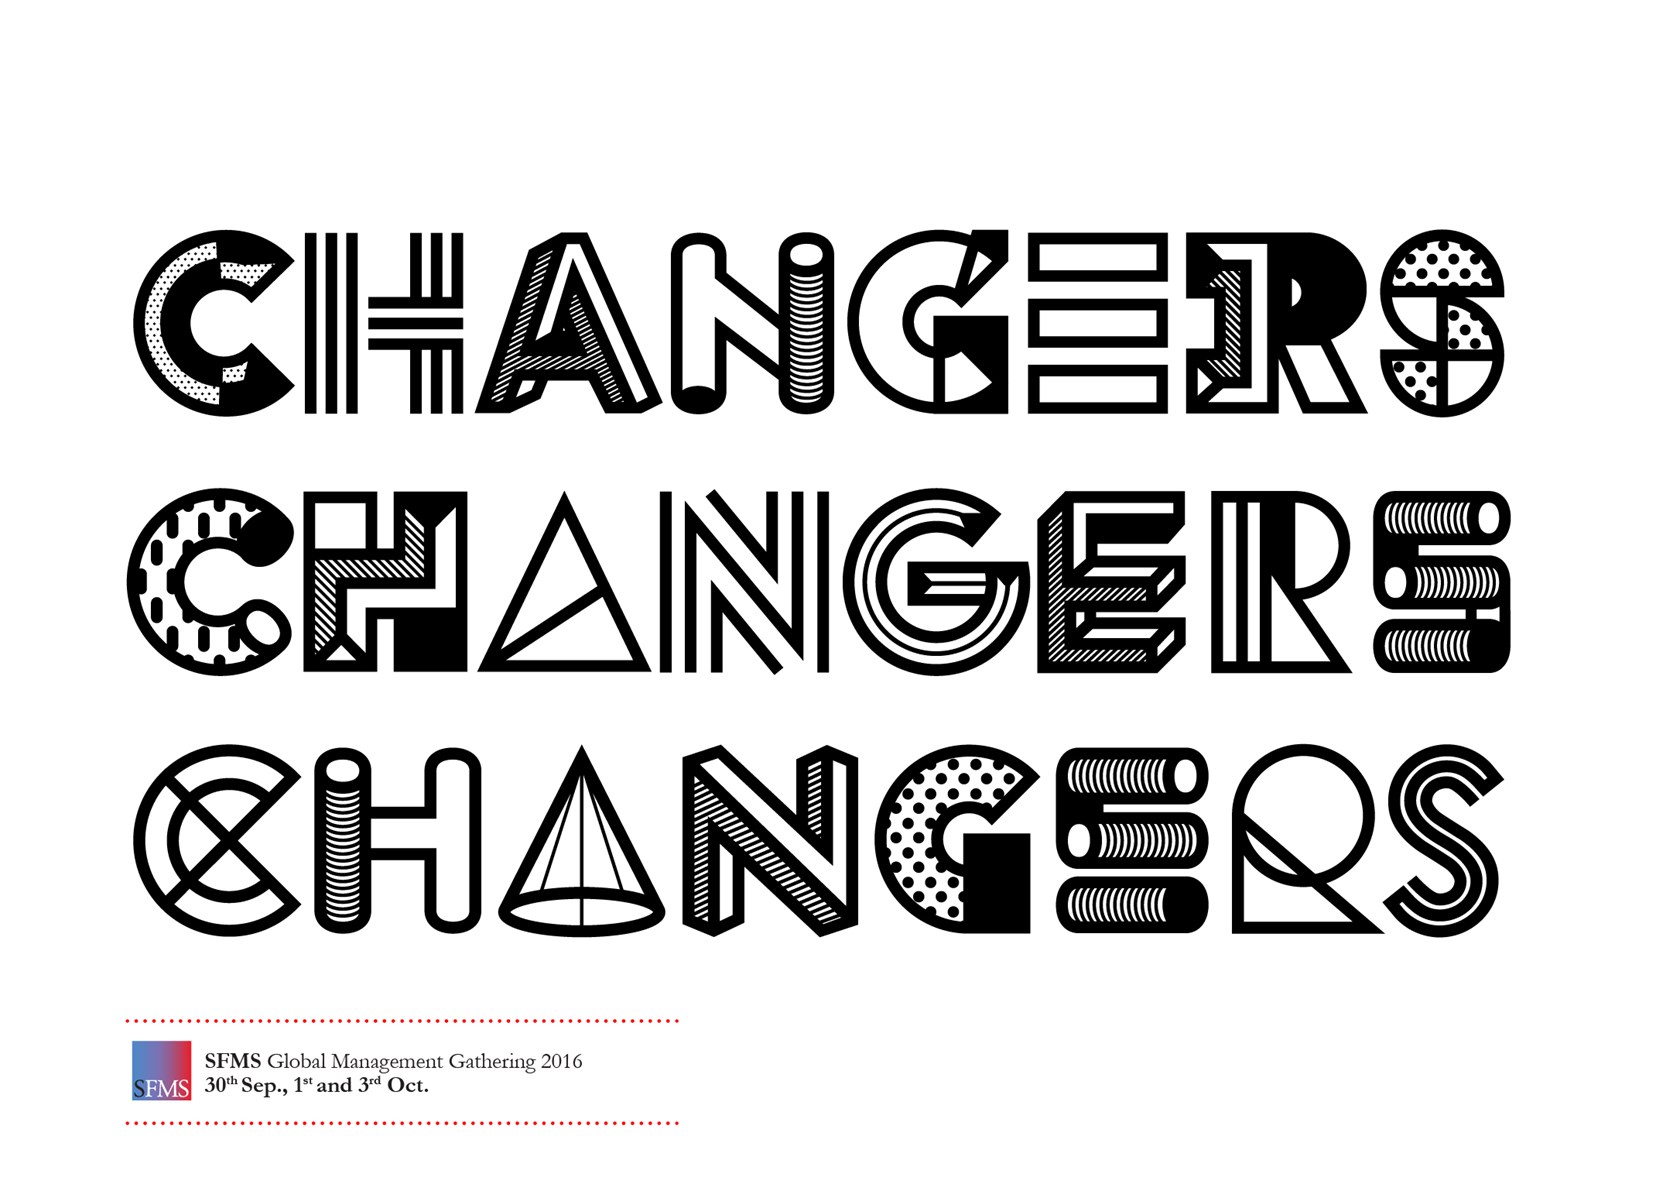 Changers2016 Intro